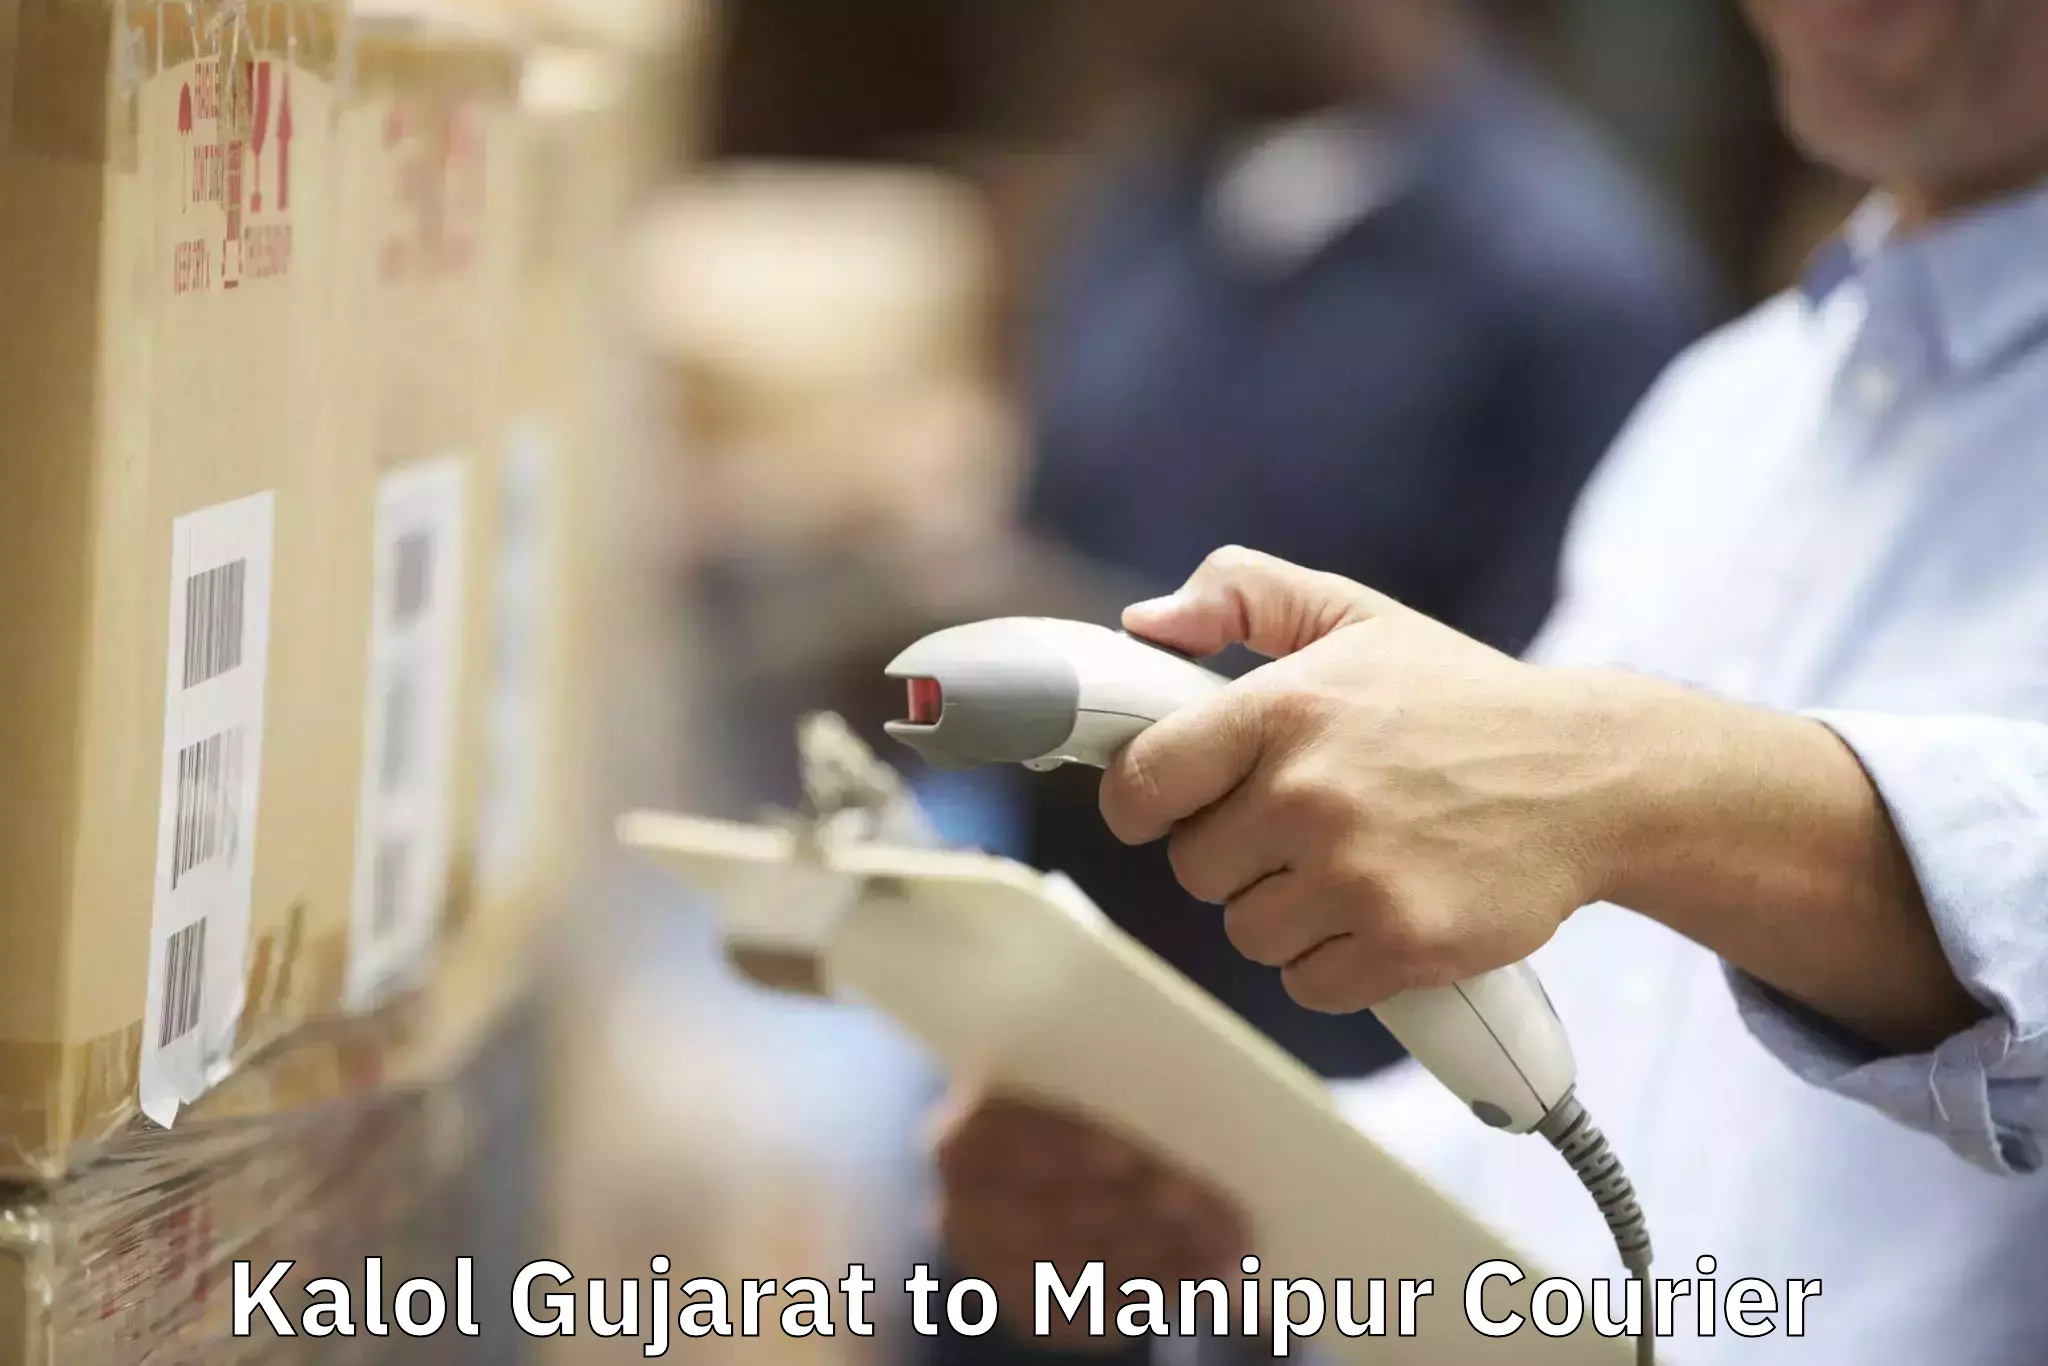 Customized moving experience Kalol Gujarat to Manipur